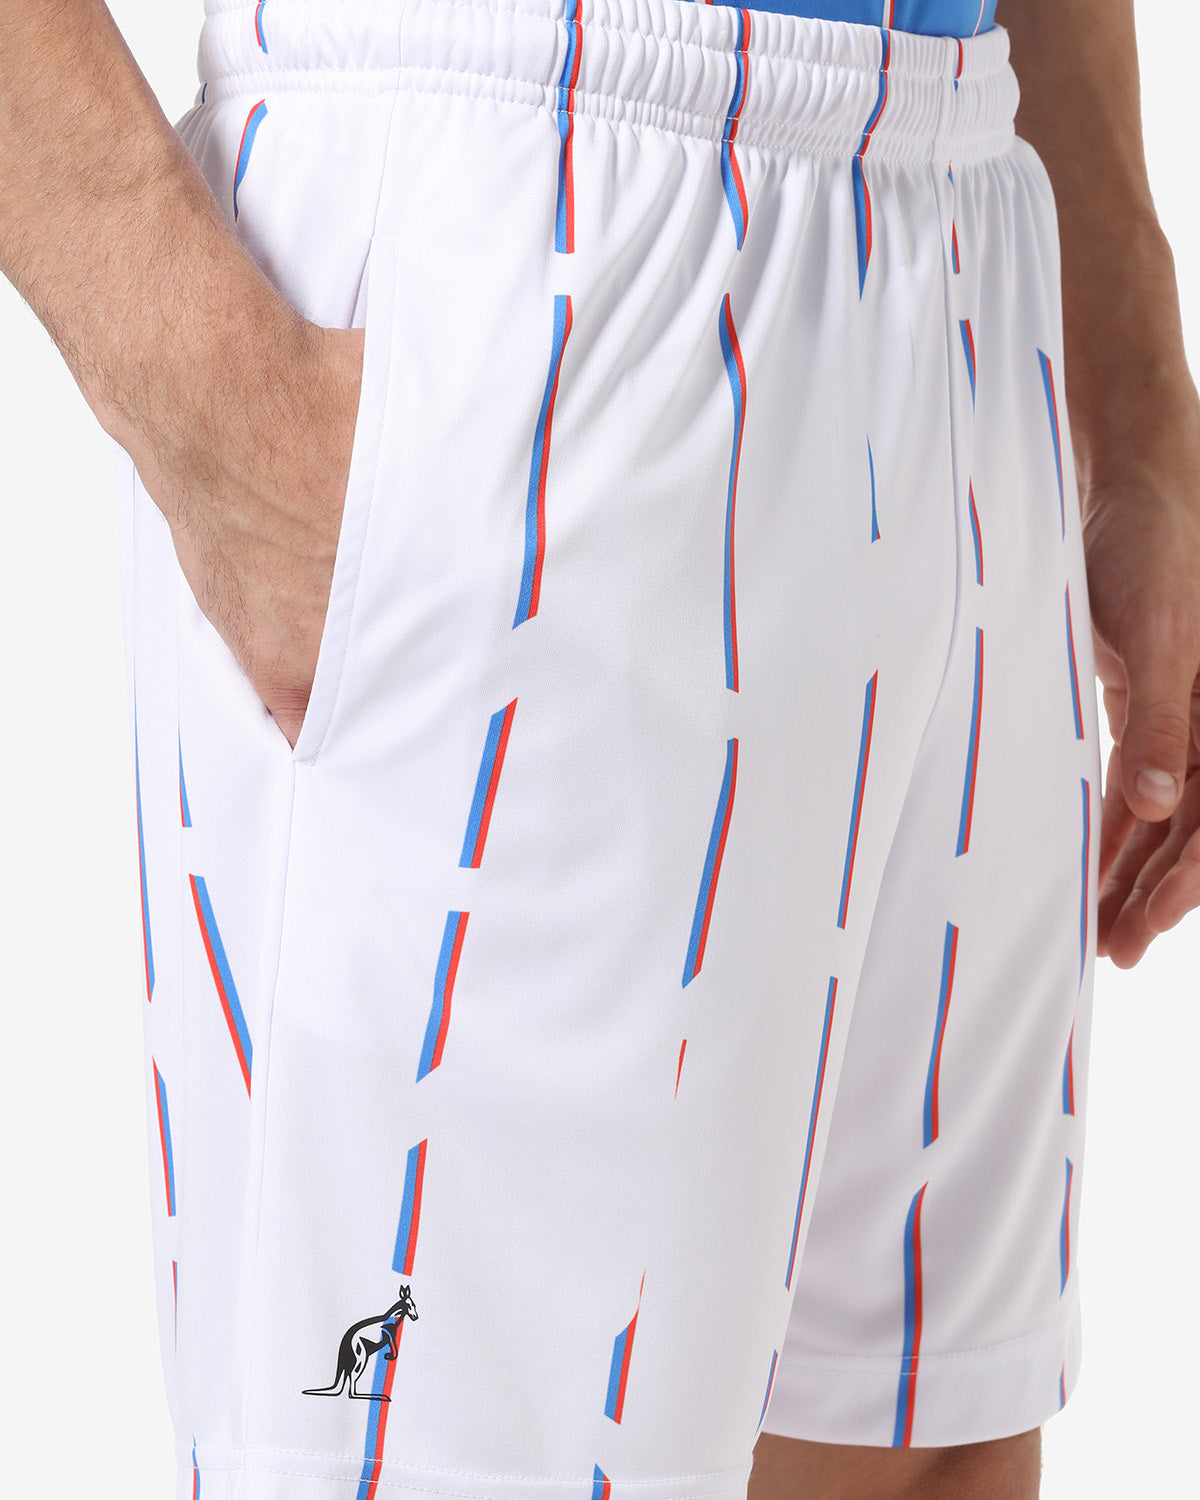 Stripe Shorts: Australian Tennis